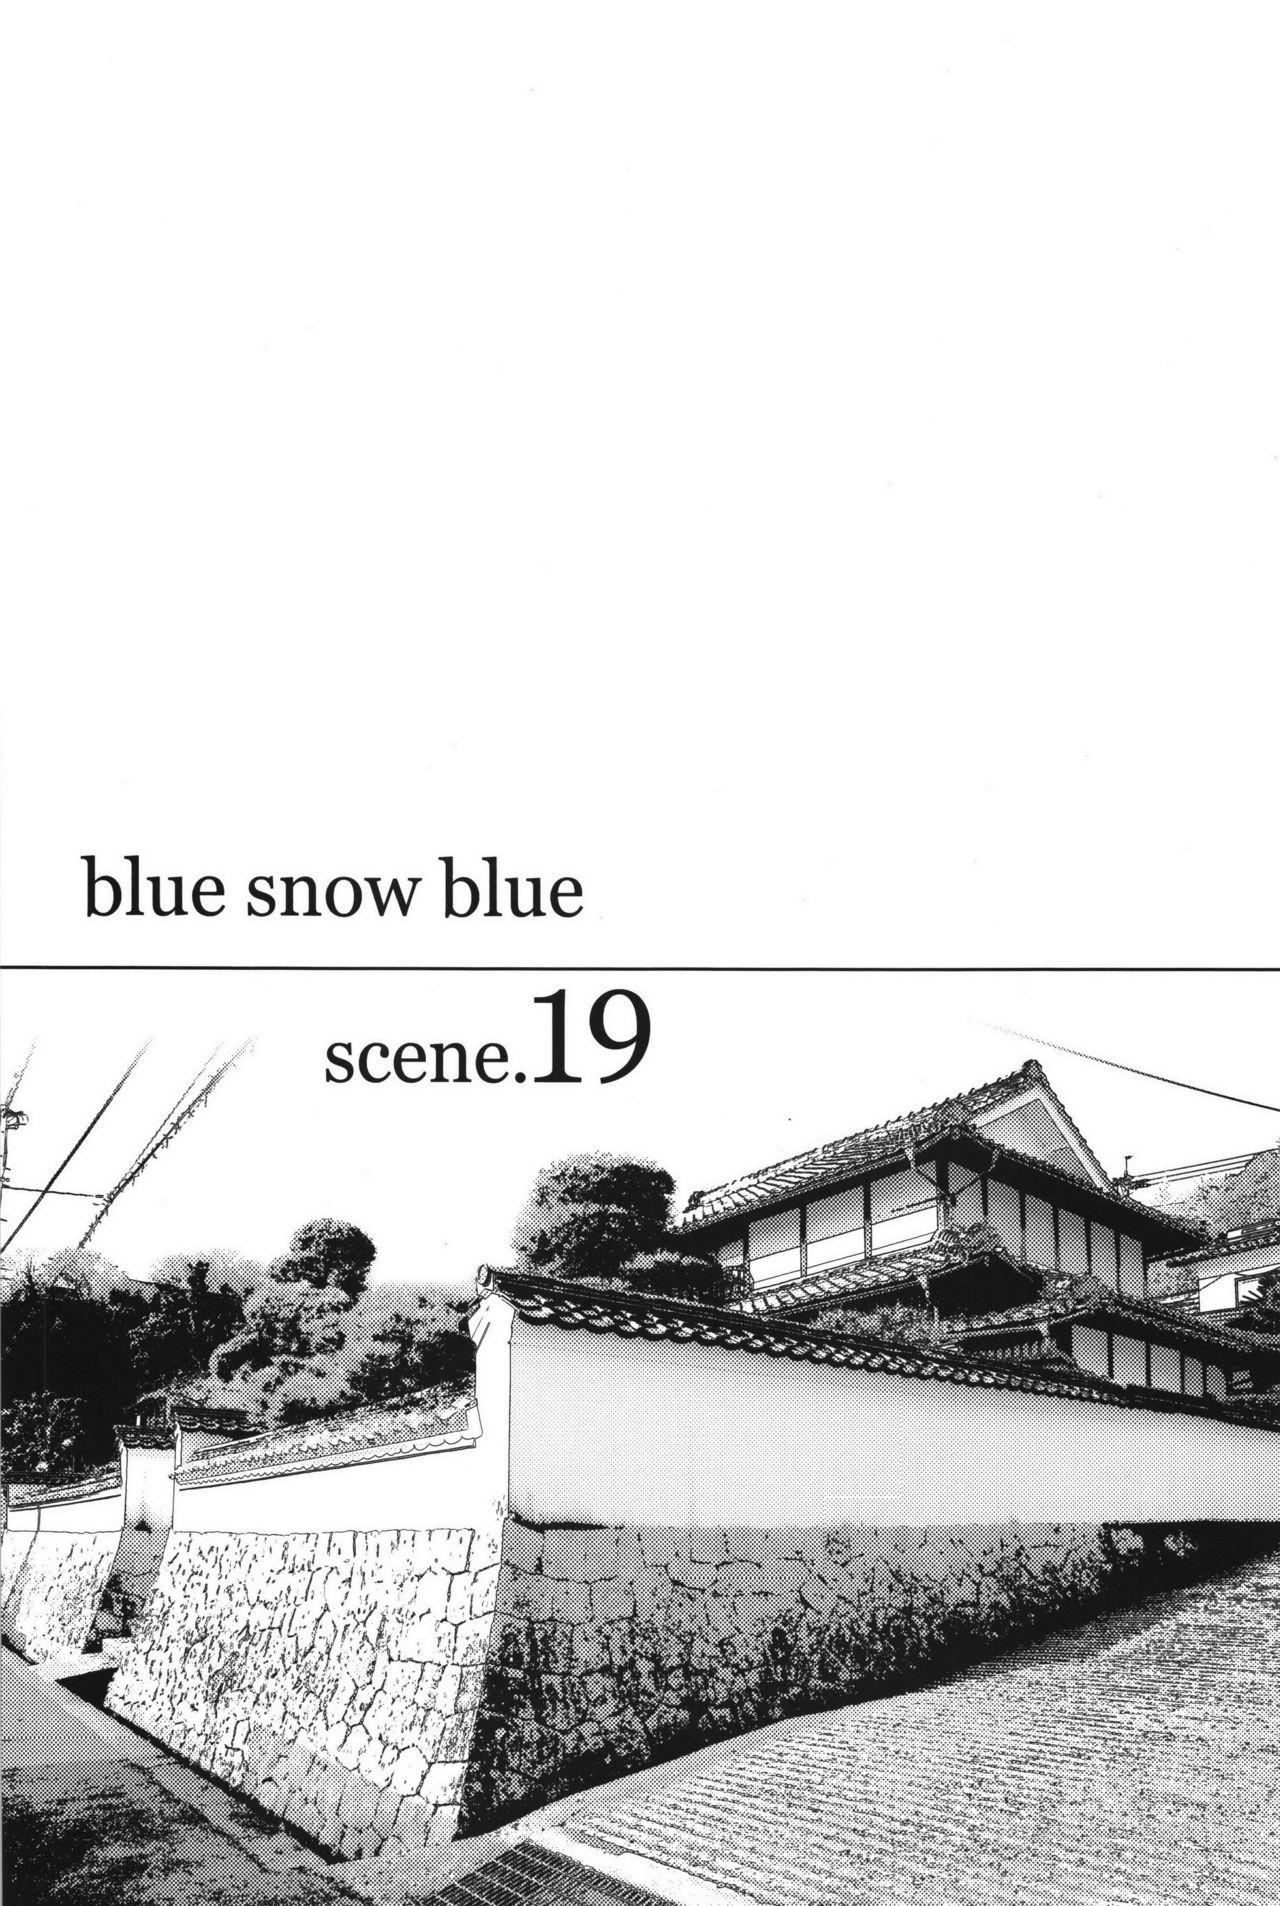 blue snow blue scene.19 1